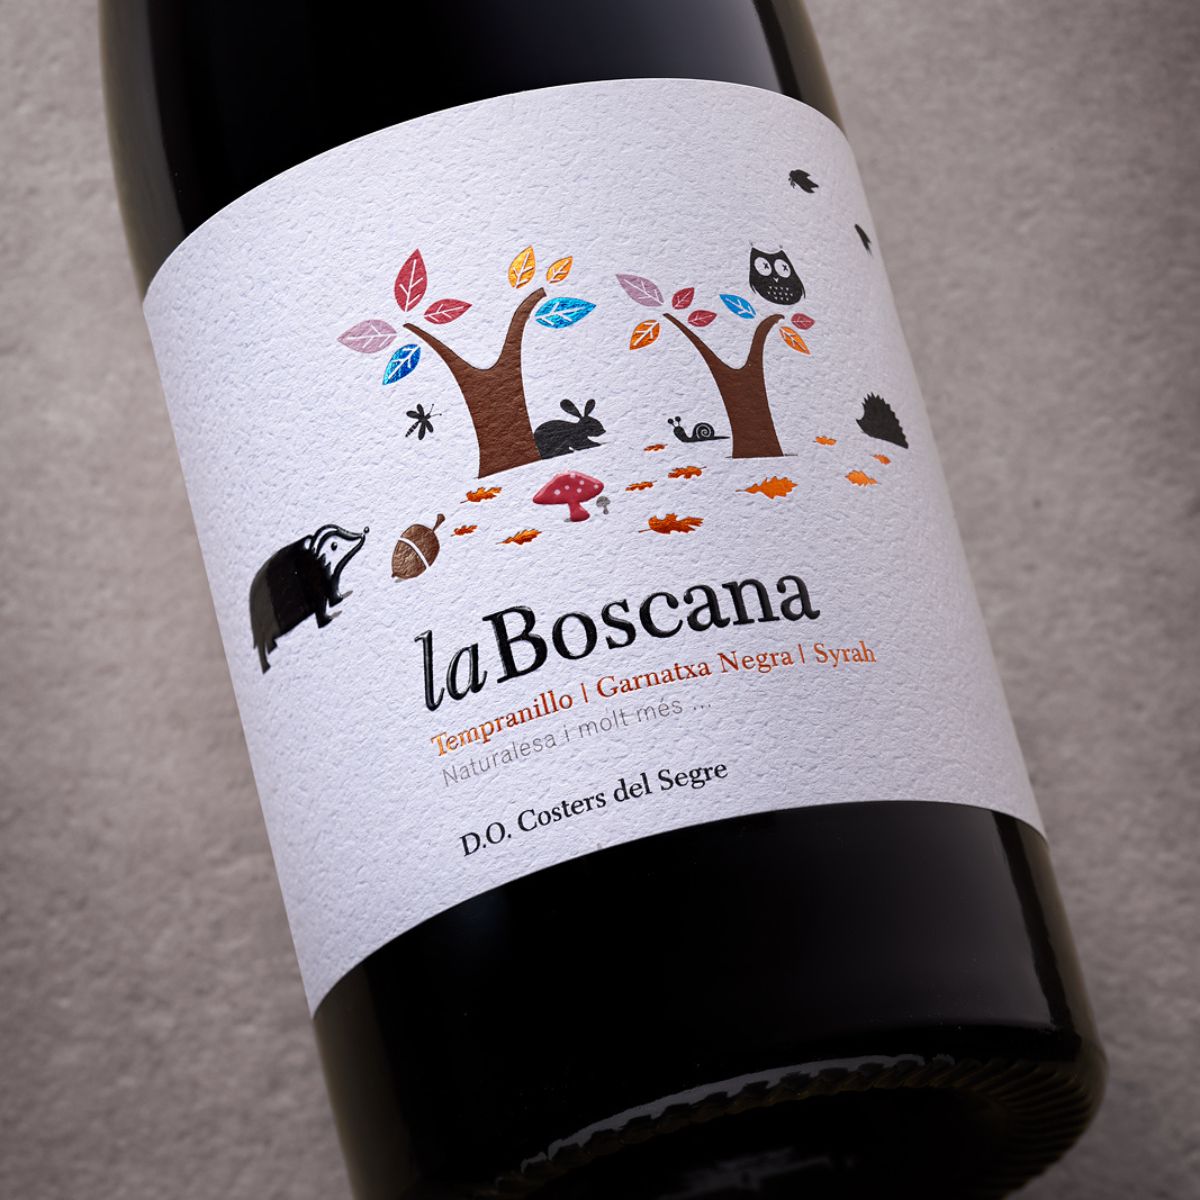 Red Wine La Boscana label | Costers del Sió Winery | D.O. Costers del Segre